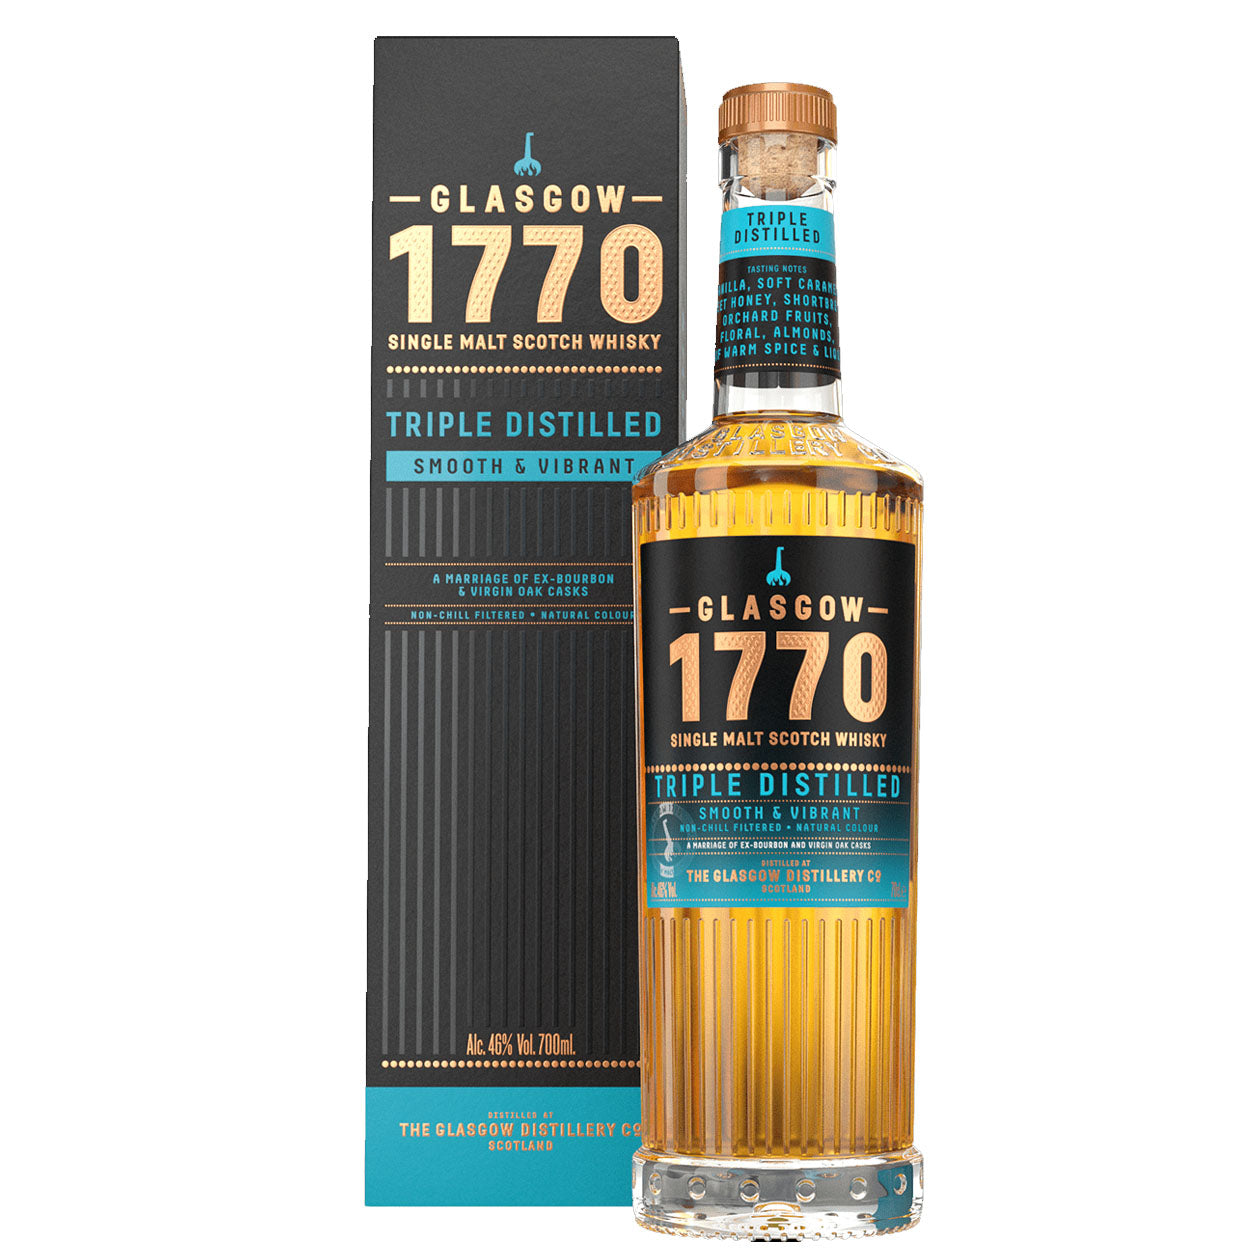 Glasgow 1770 Triple Distilled Smooth Vibrant Single Malt Scotch